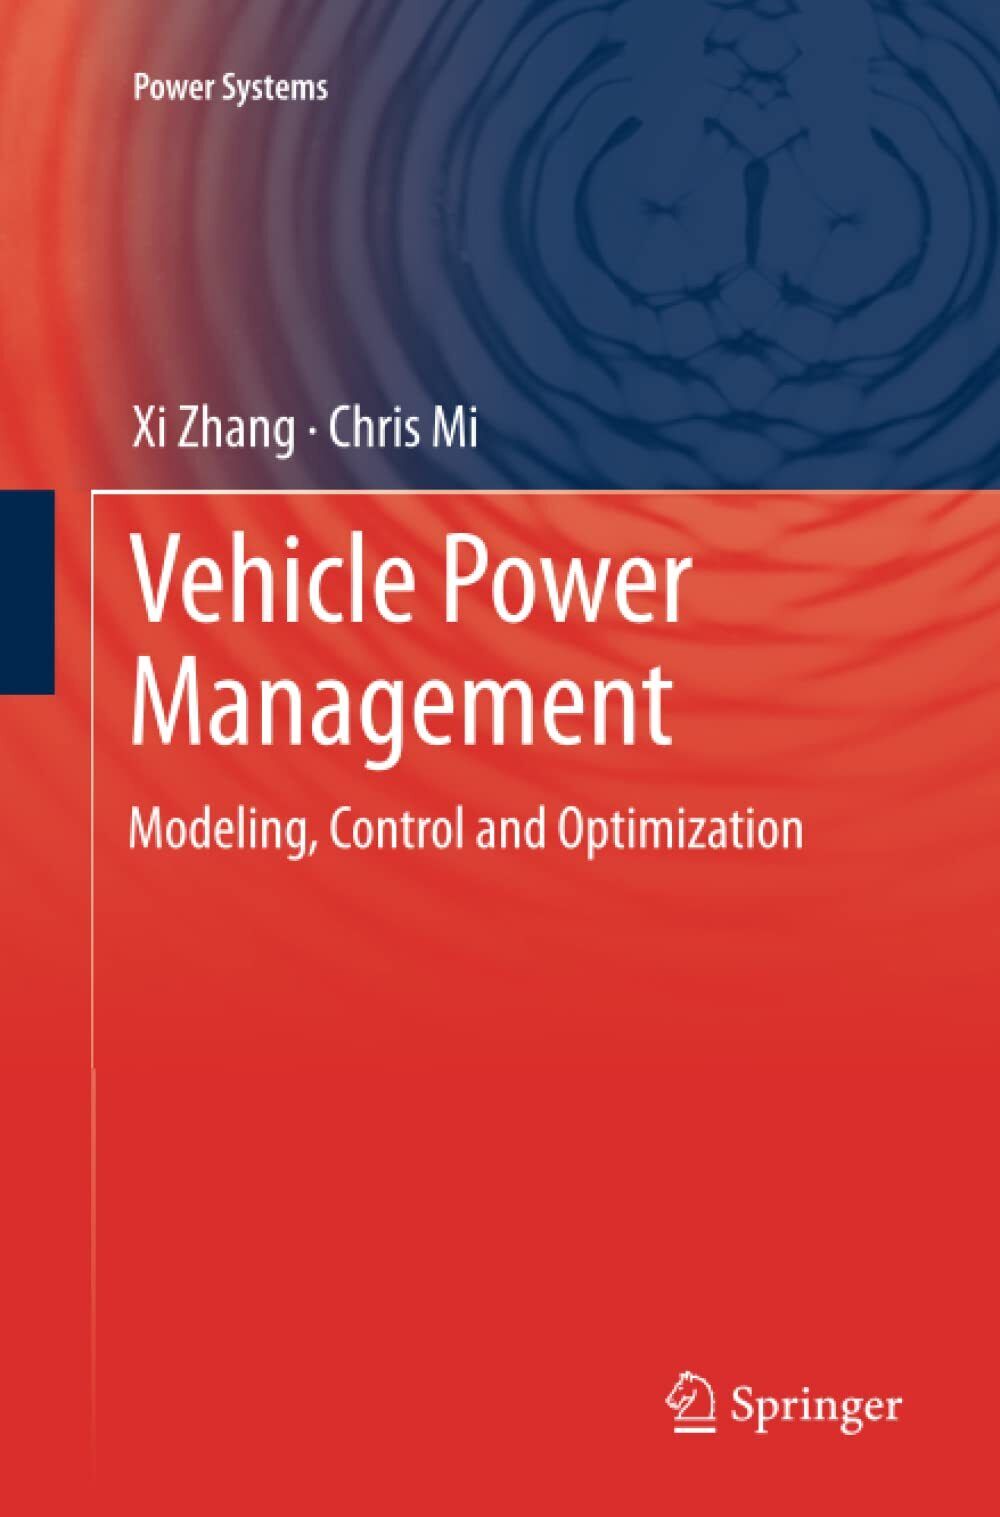 Vehicle Power Management - Chris Mi, Xi Zhang - Springer, 2013